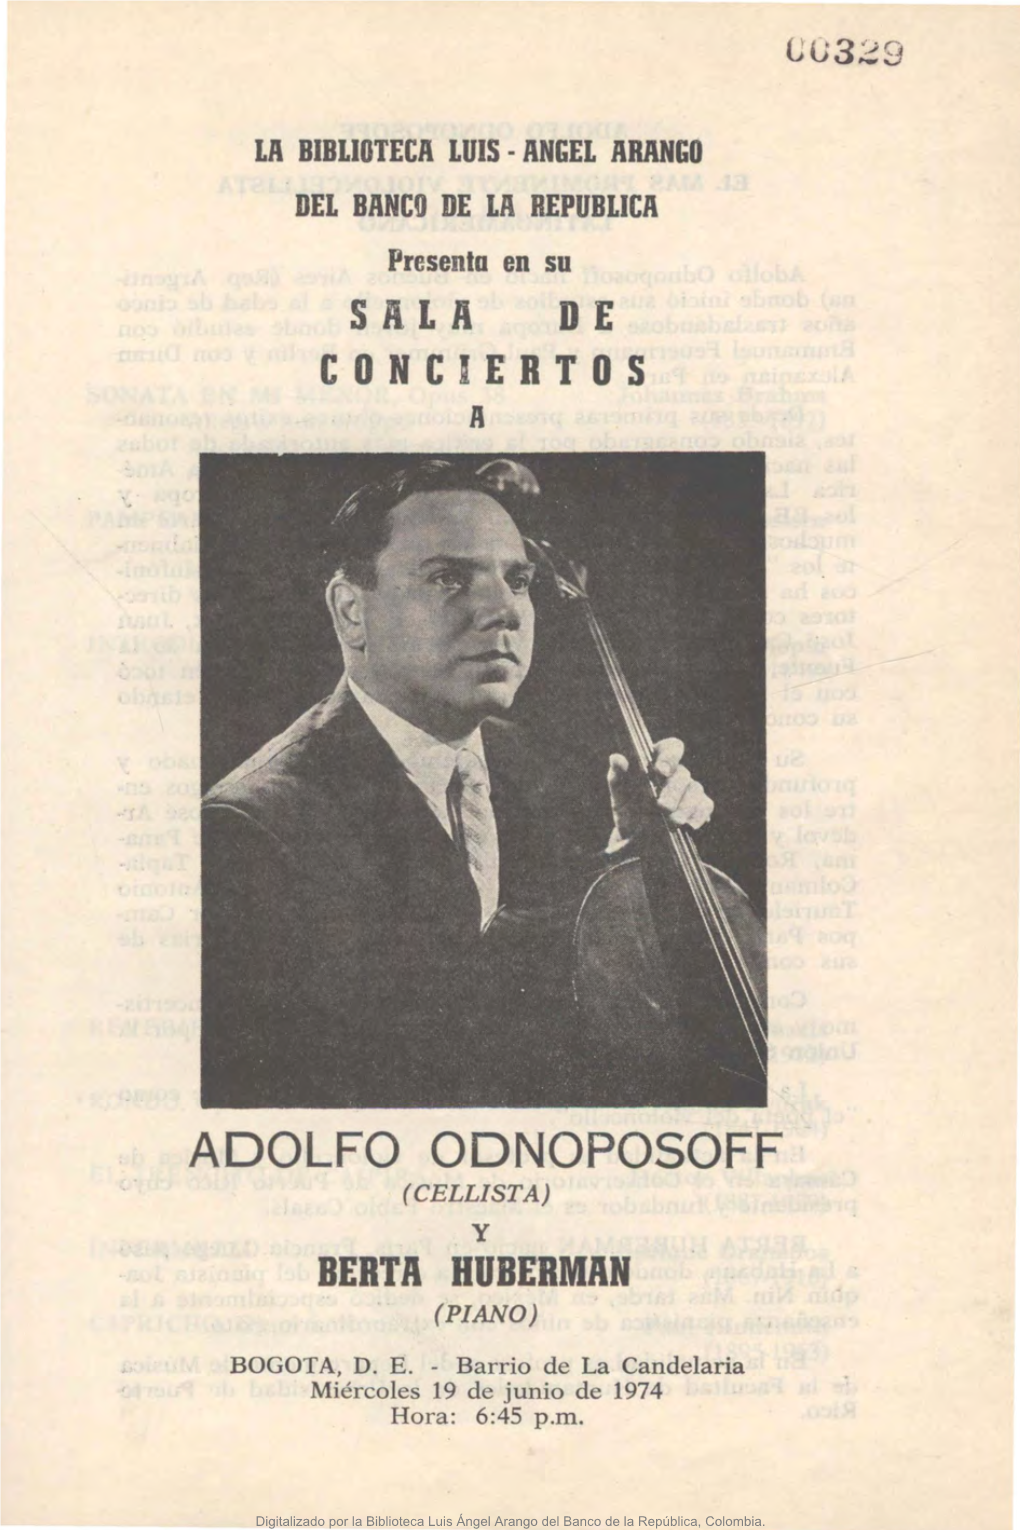 Adolfo Odnoposoff Cellista